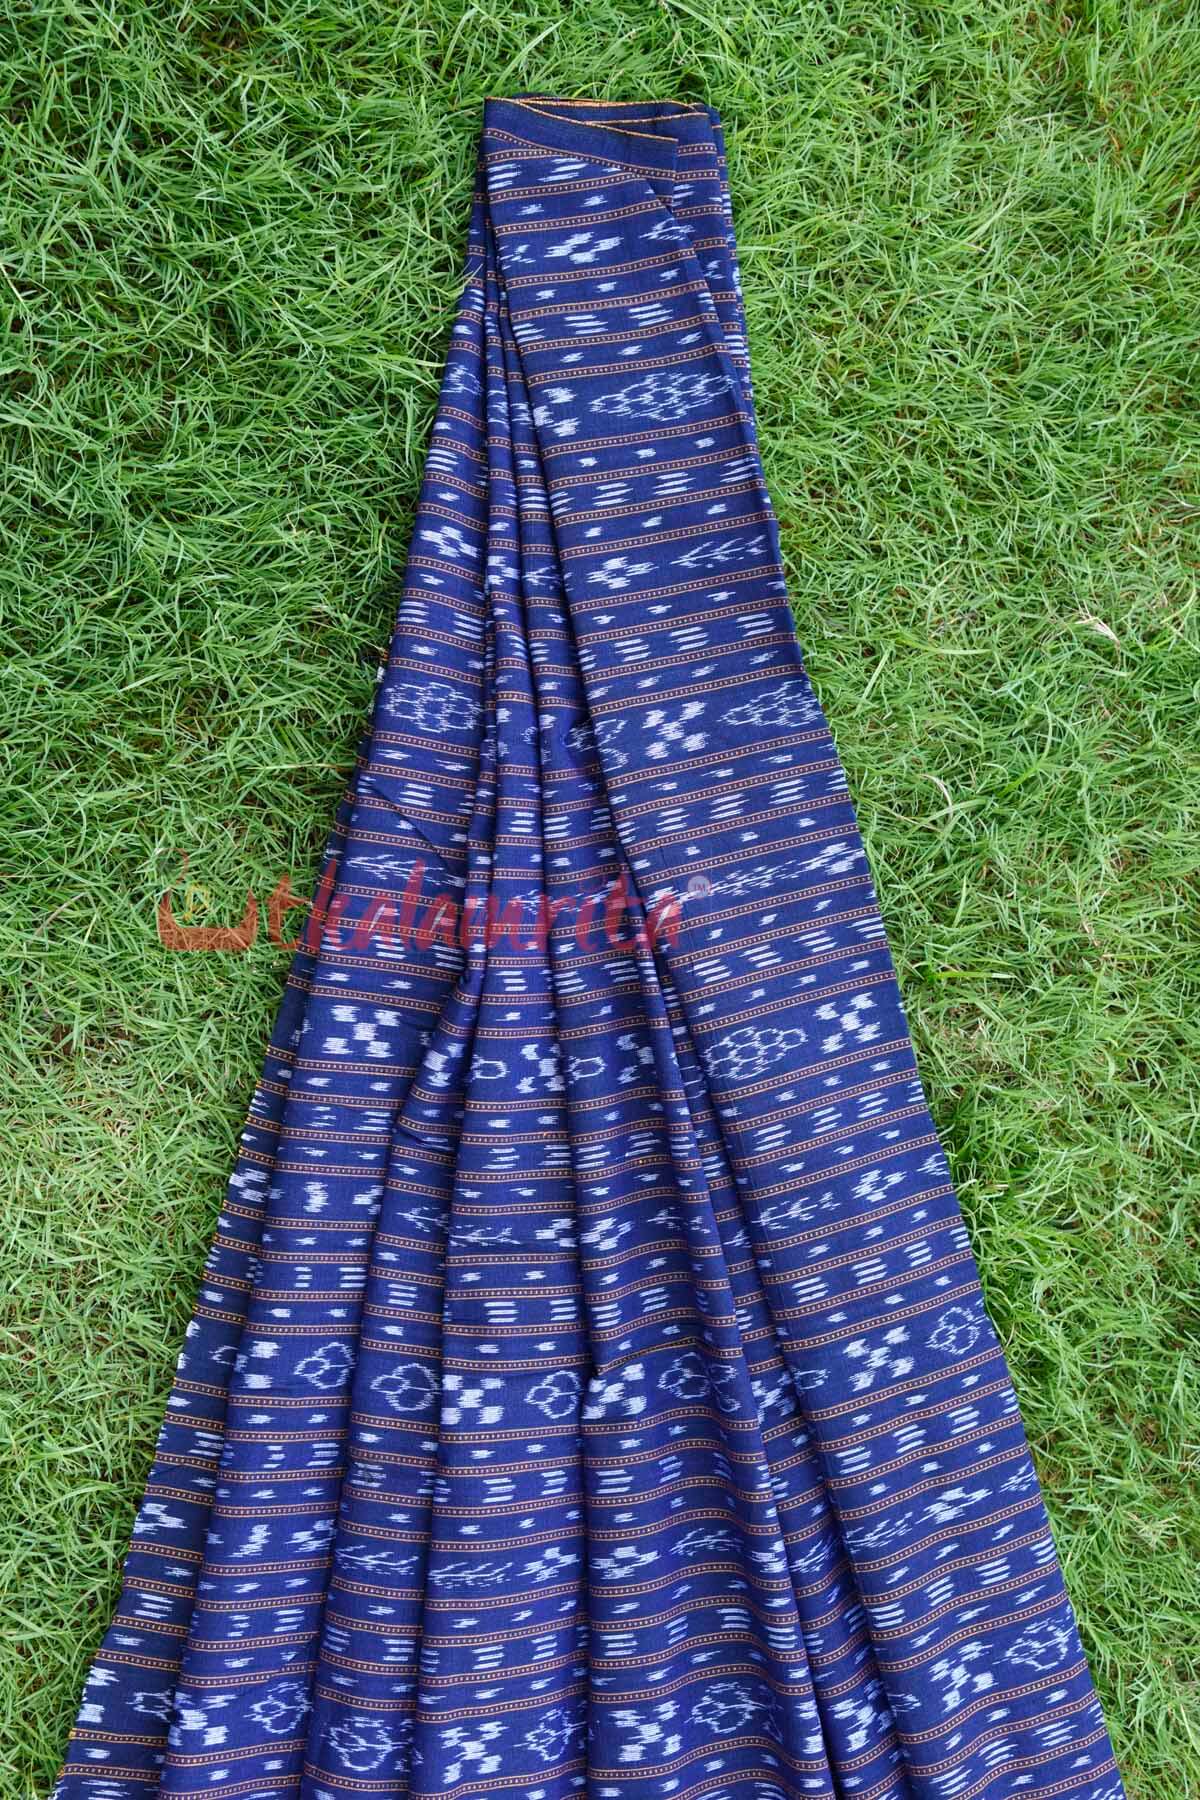 Royal Blue Ikat (Fabric)